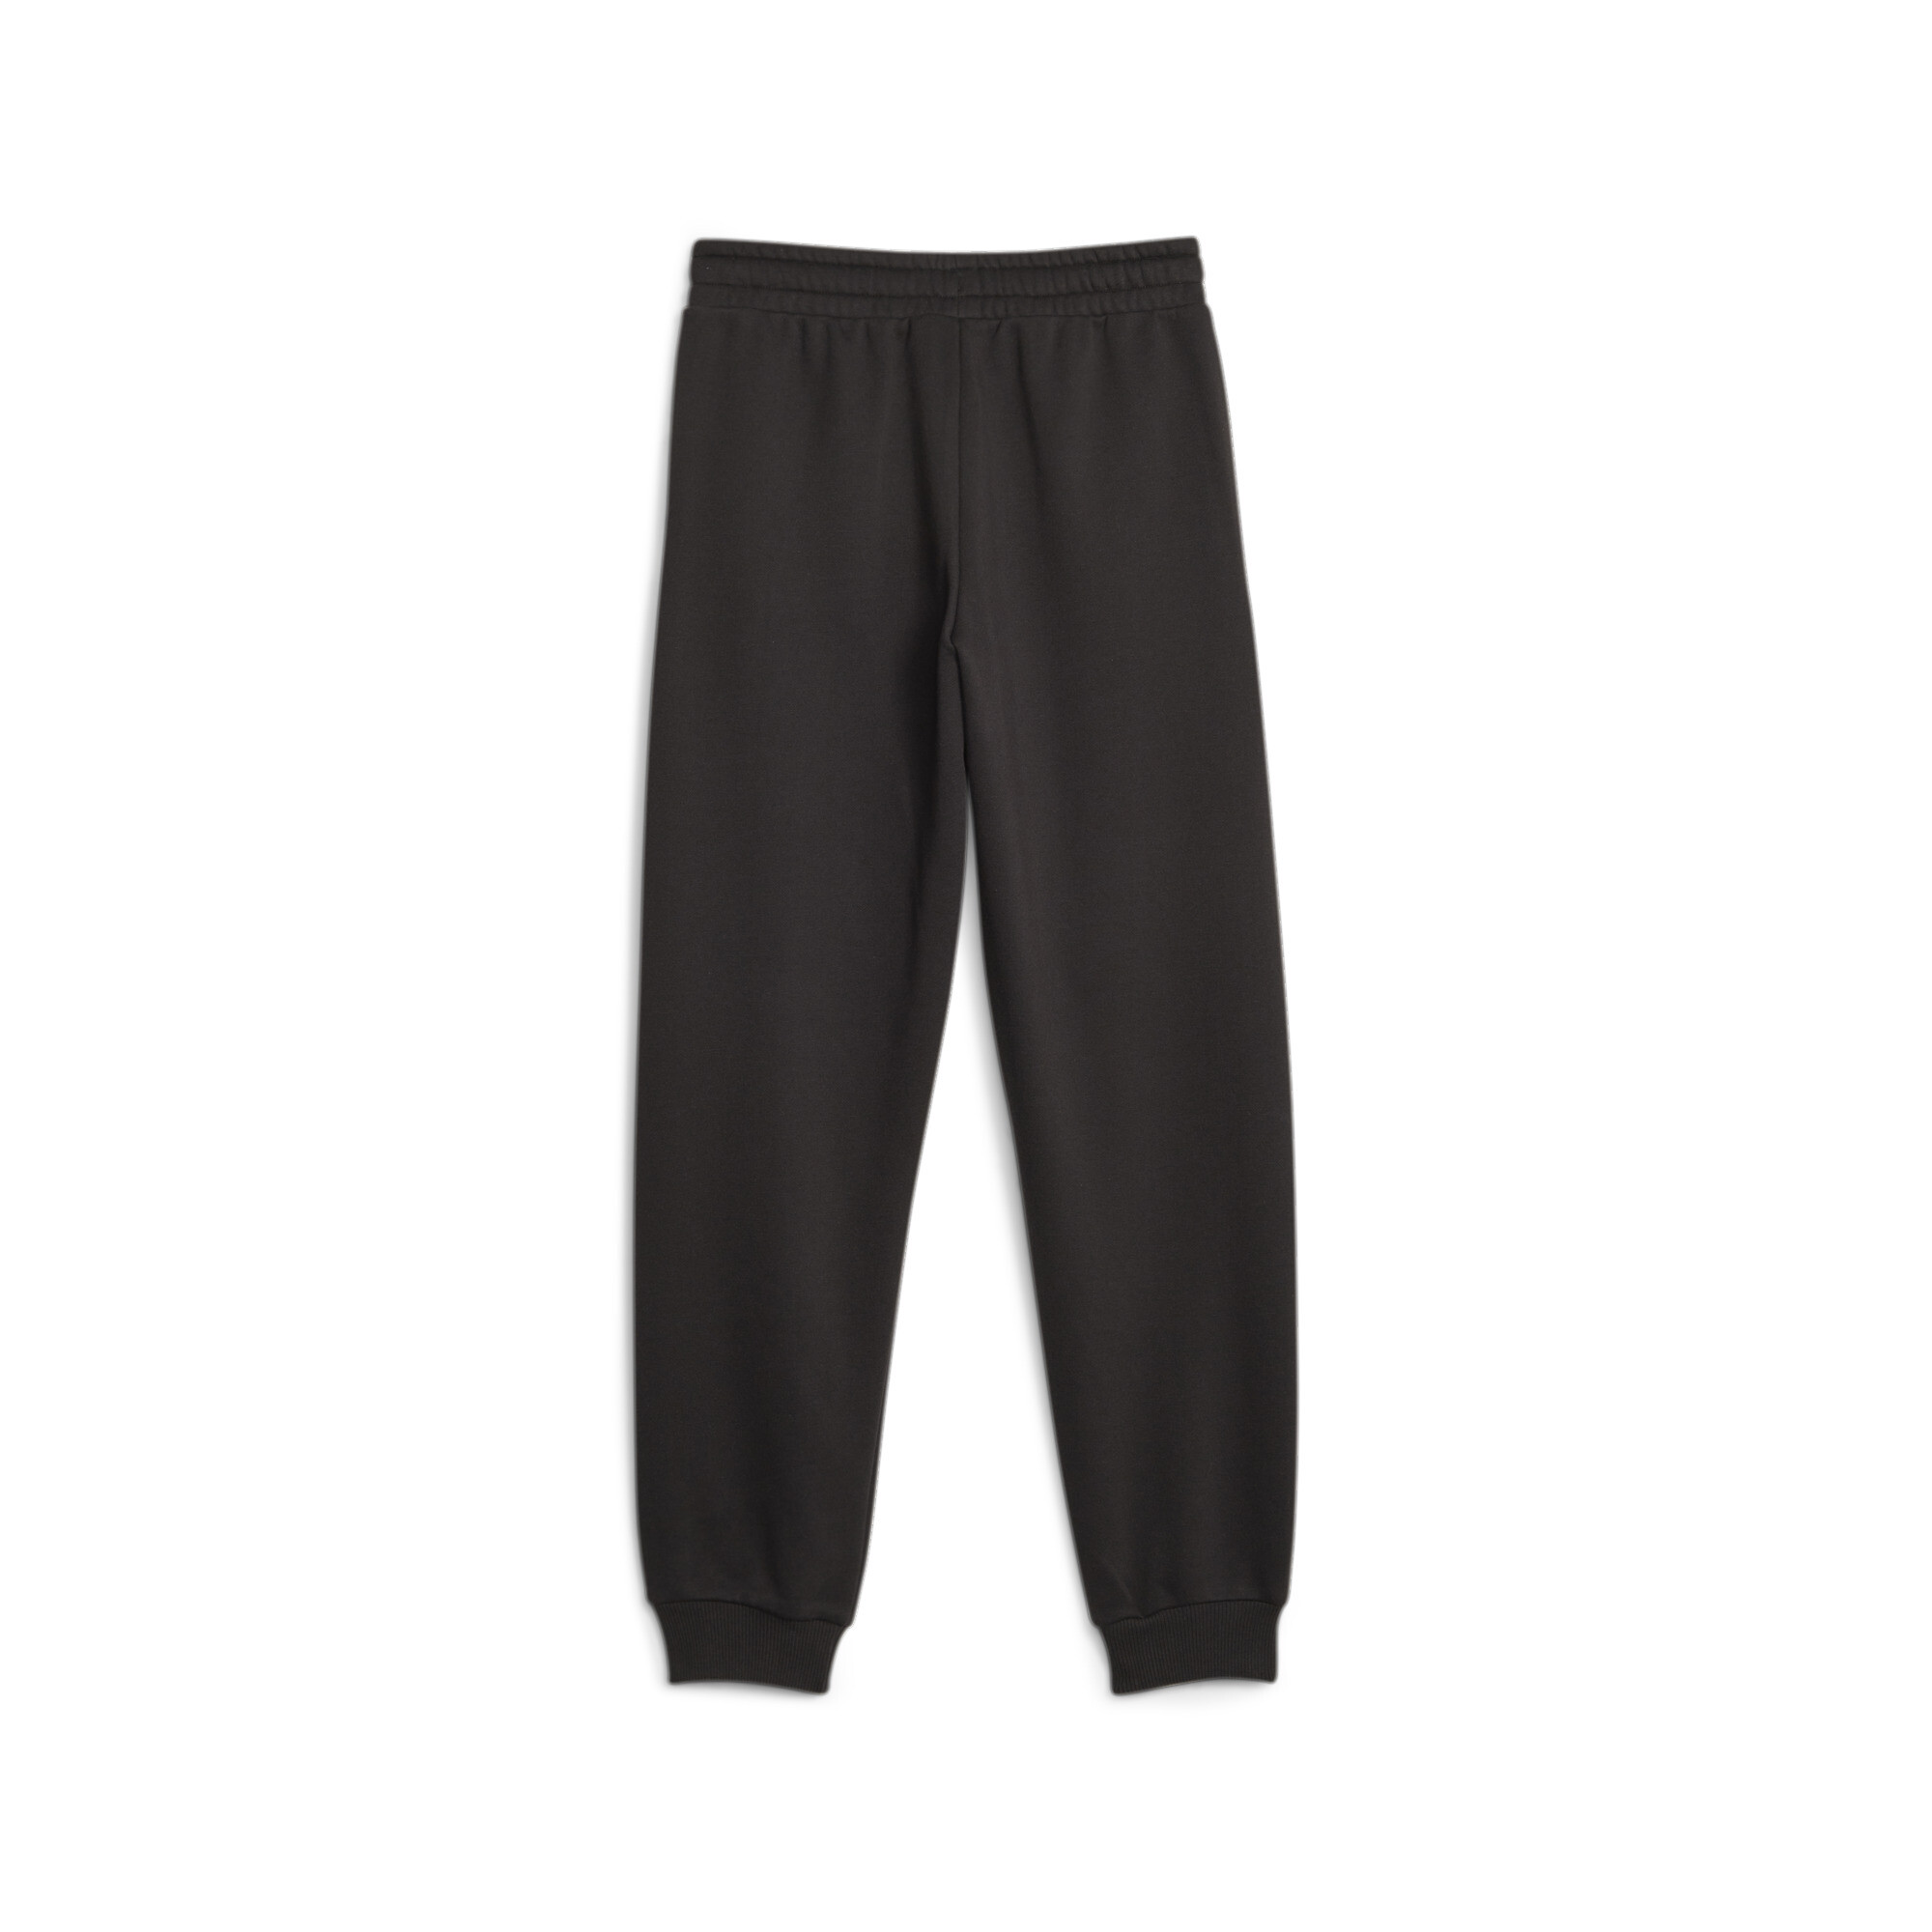 Puma X MIRACULOUS Youth Sweatpants, Black, Size 7-8Y, Clothing